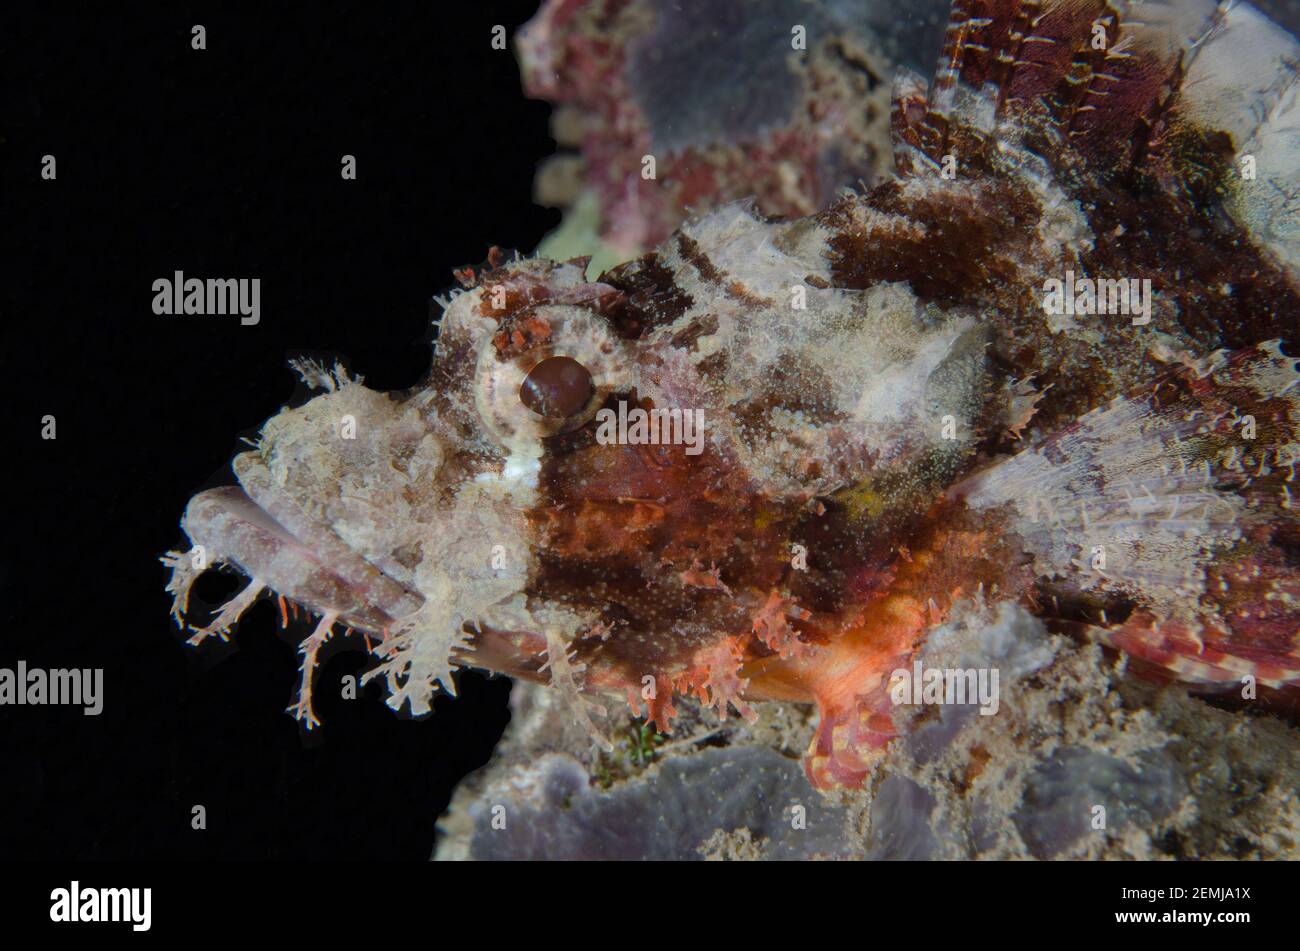 Tasseled Scorpionfish, Scorpaenopsis oxycephala, night dive, Mimpi Channel dive site, near Menjangan Island, Bali, Indonesia Stock Photo